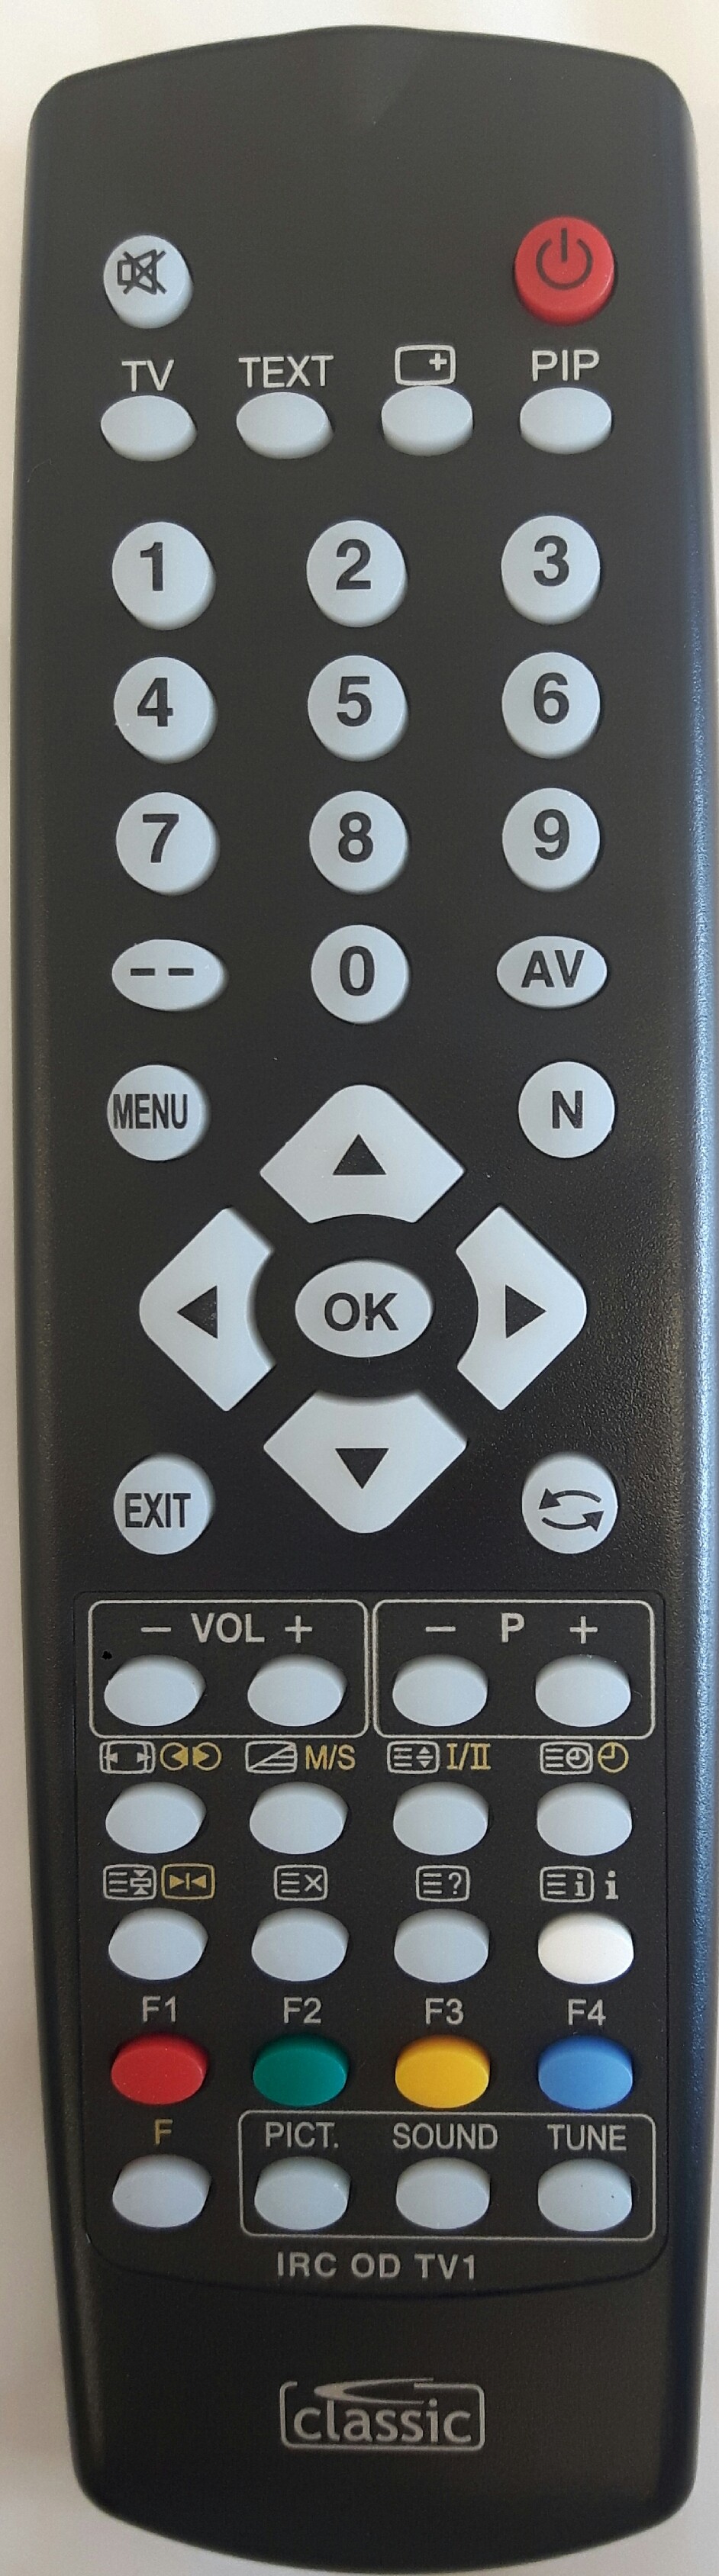 MATSUI MAT20C107 Remote Control